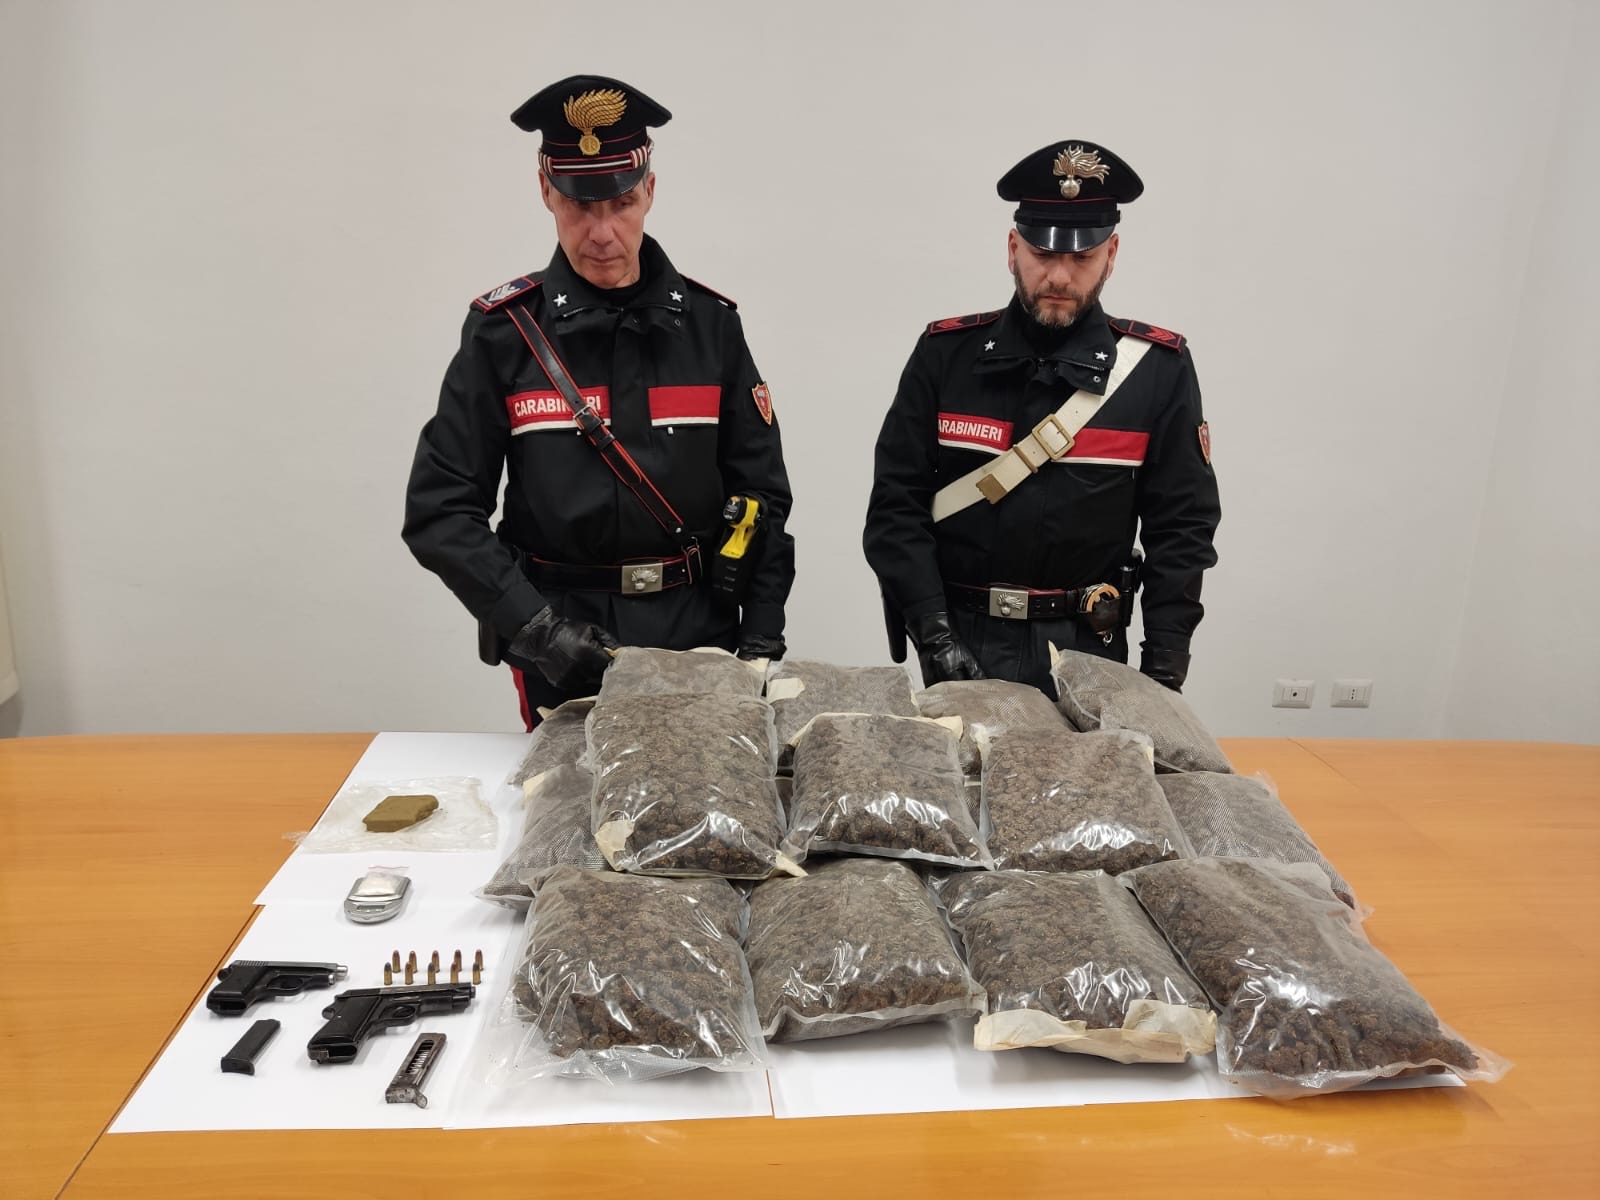 37 chili di marijuana, hashish, cocaina e armi: arrestasti due giovani